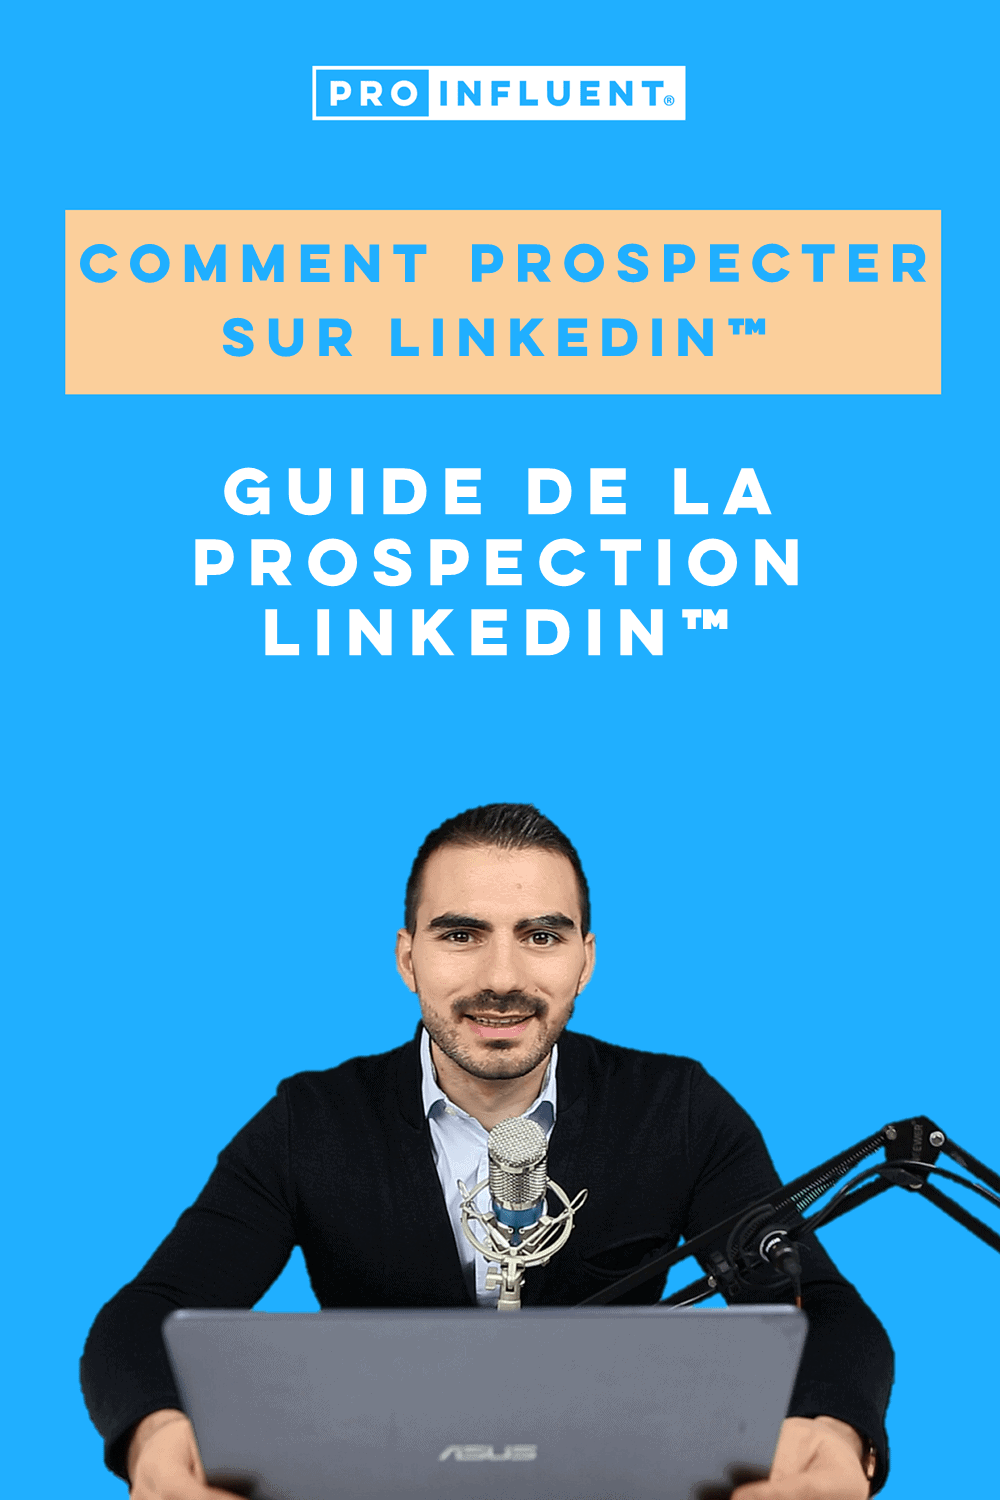 How to prospect on LinkedIn™? Guide to Prospecting LinkedIn™